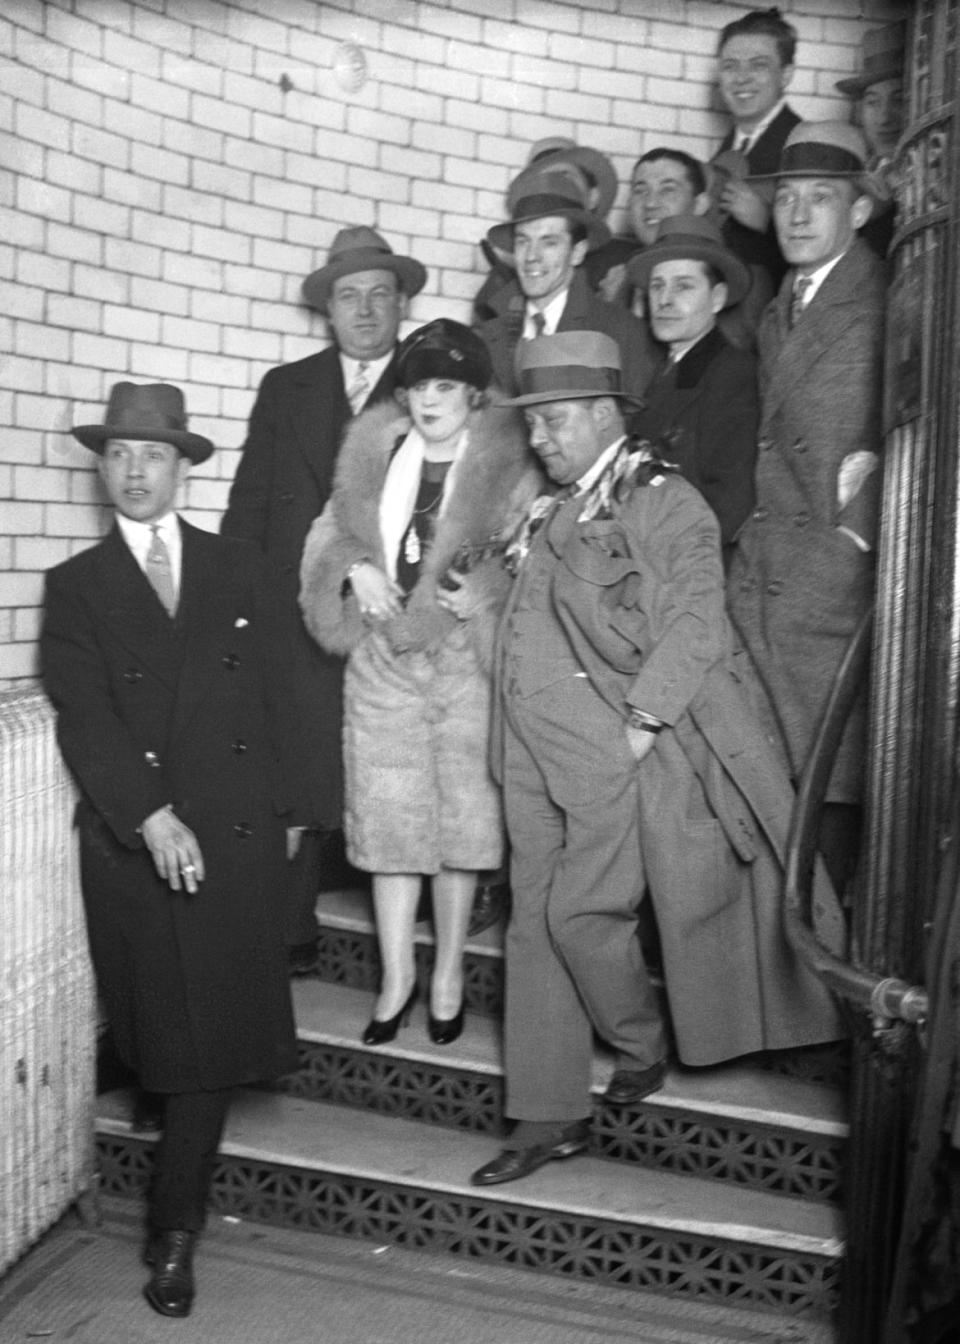 <div class="inline-image__caption"><p>Mae West, as she left court in 1927.</p></div> <div class="inline-image__credit">Bettmann</div>